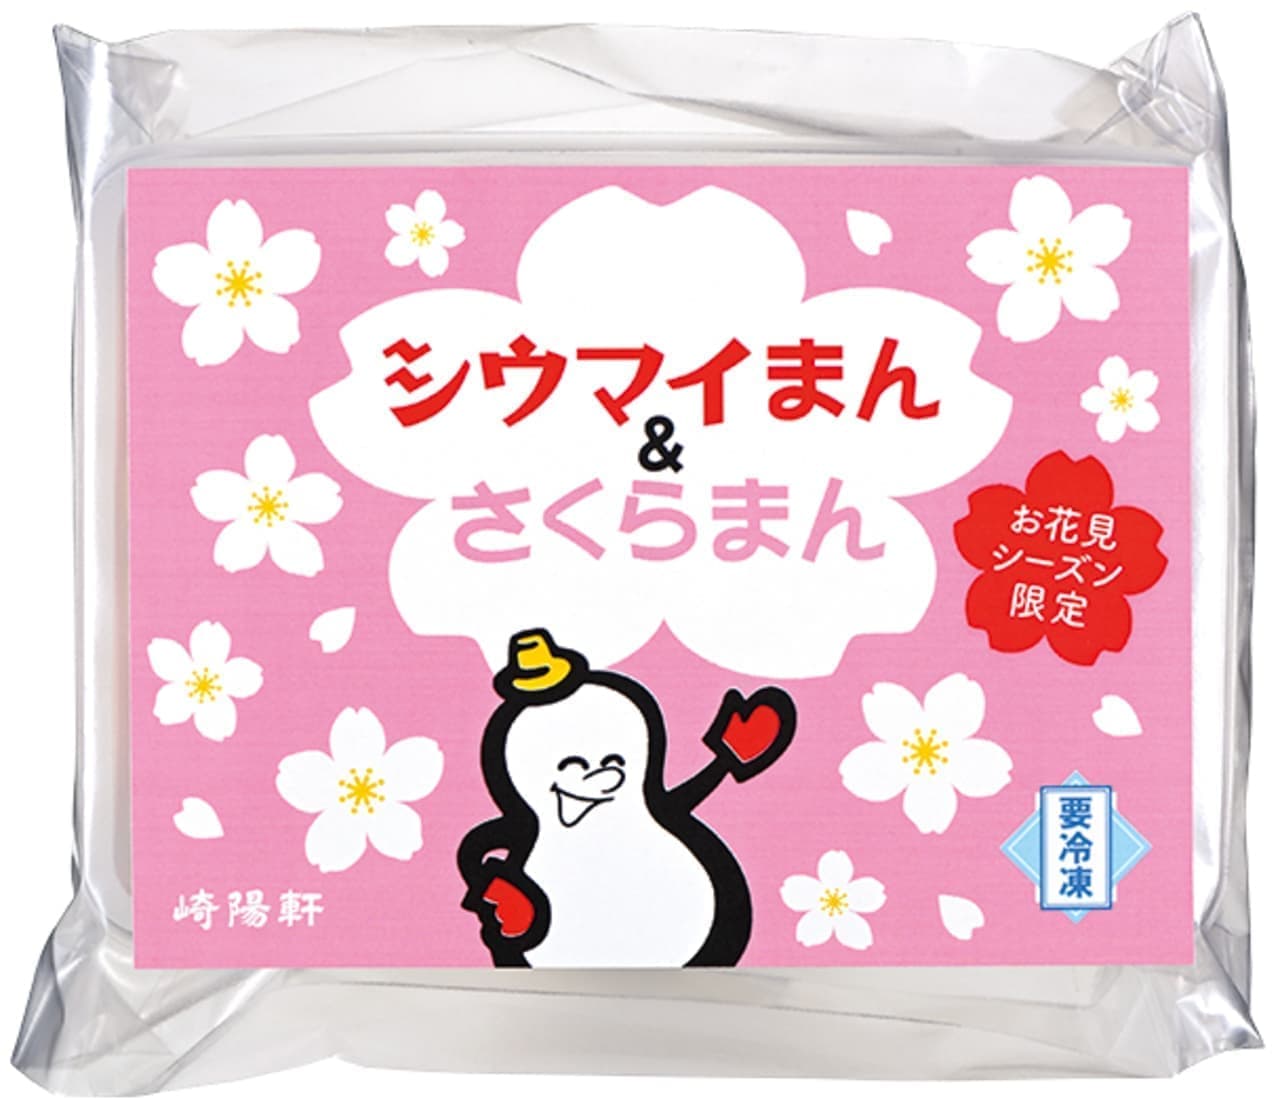 Sakiyo-ken "Cherry blossom viewing season limited shioumai man & sakura man" frozen product